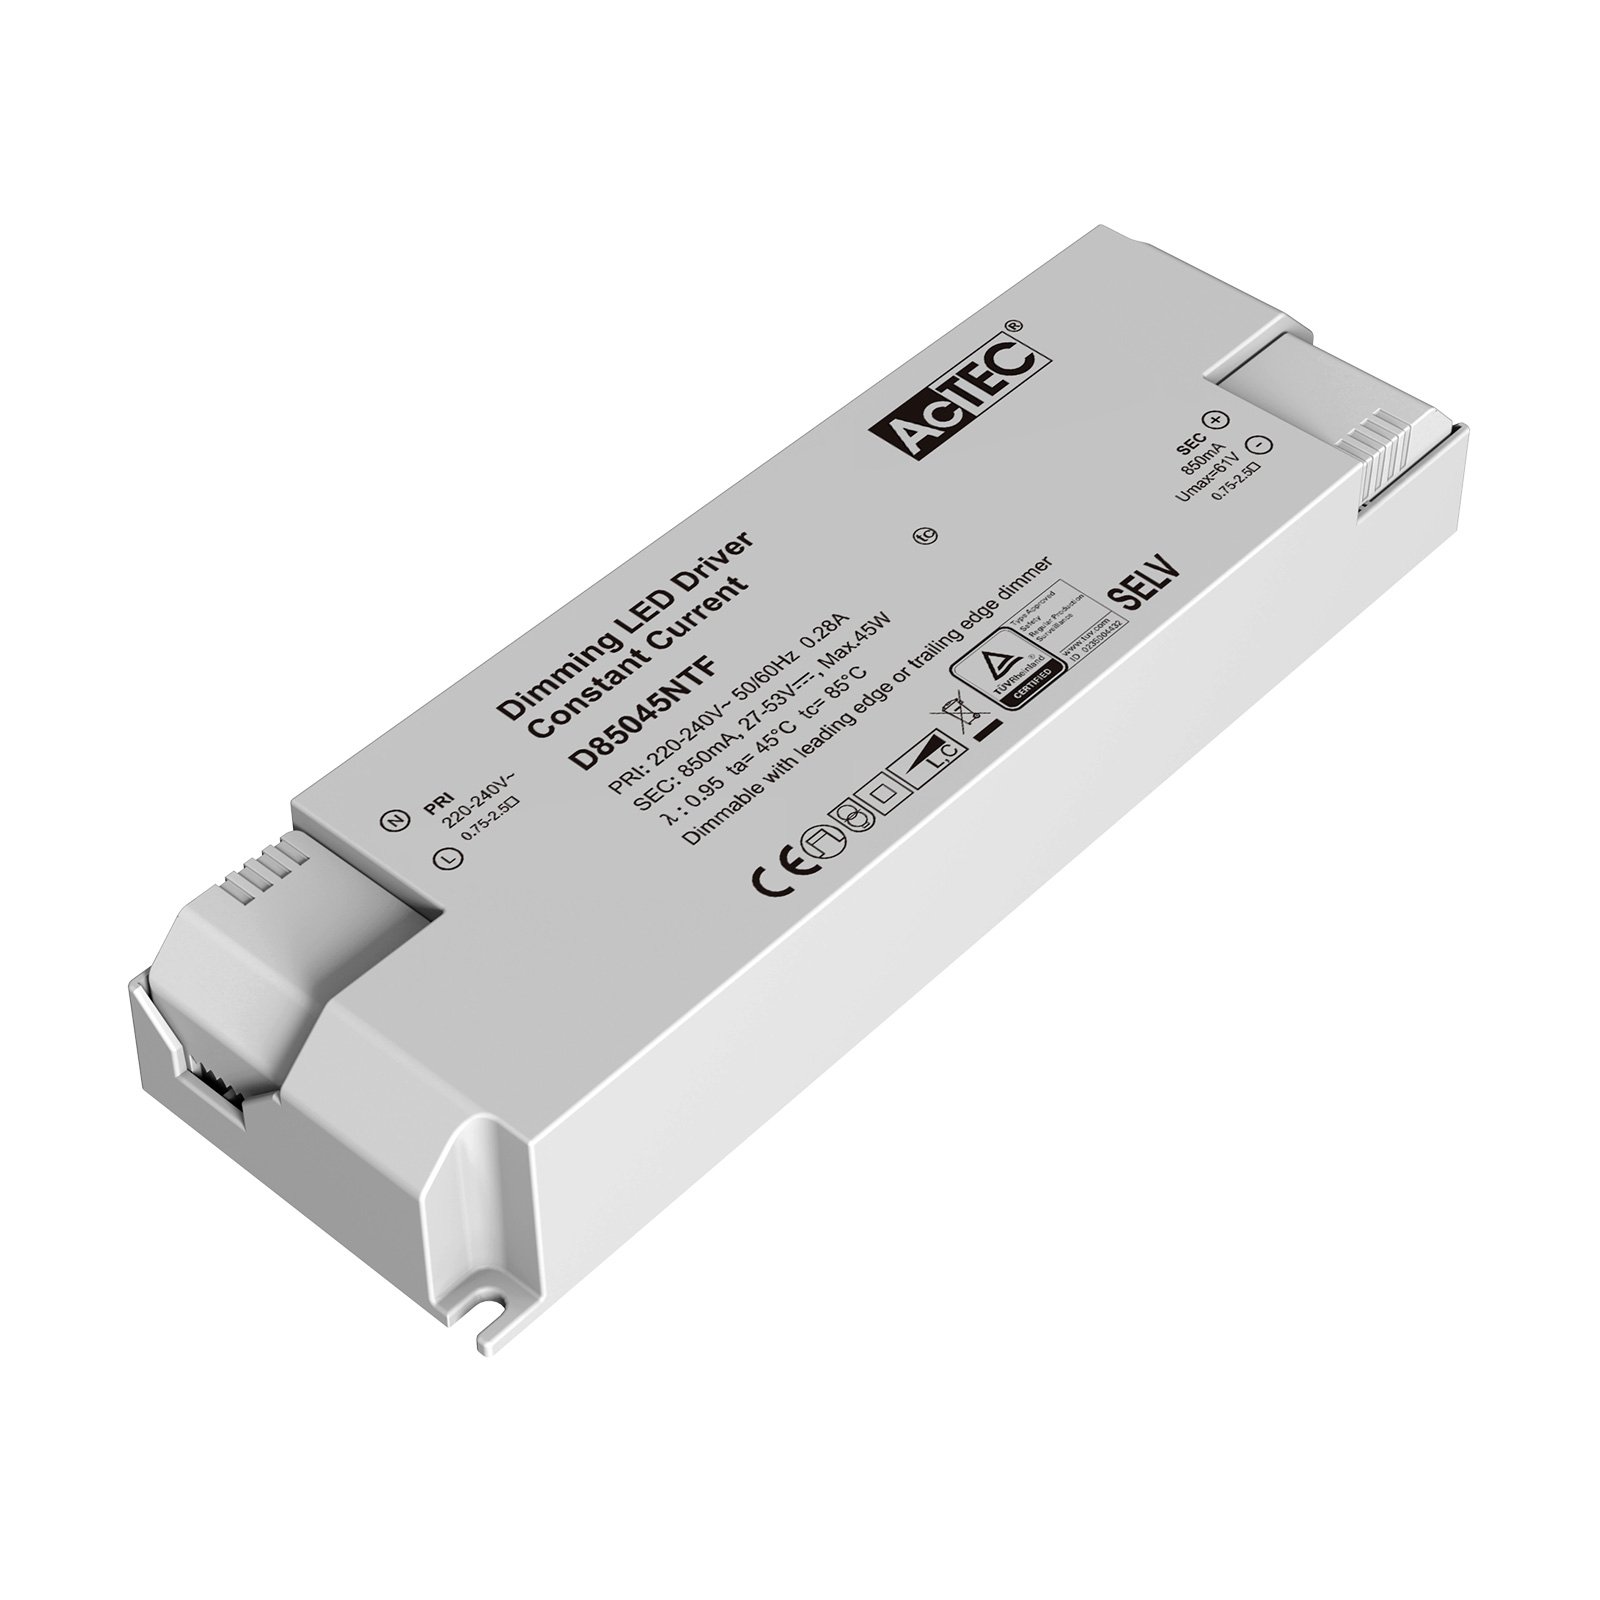 AcTEC Triac LED budič CC max. 45W 850mA